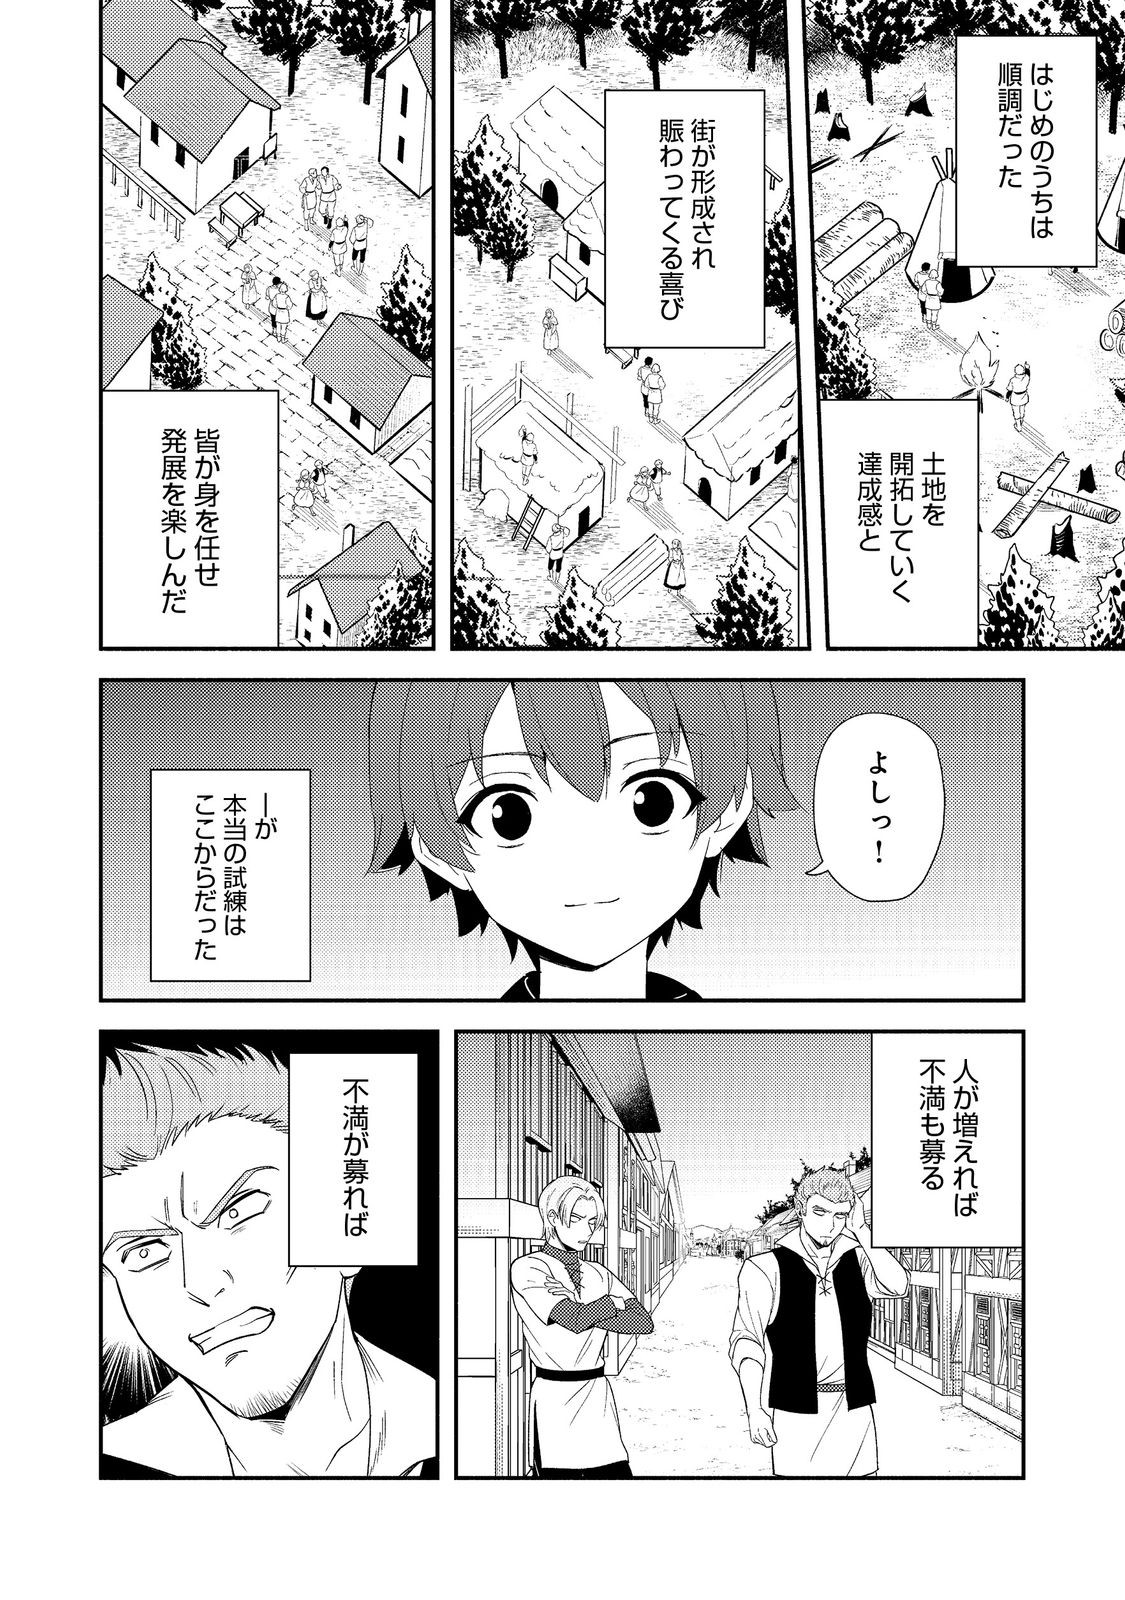 Isekai wa Template ni Michiafurete iru - Chapter 18.1 - Page 4